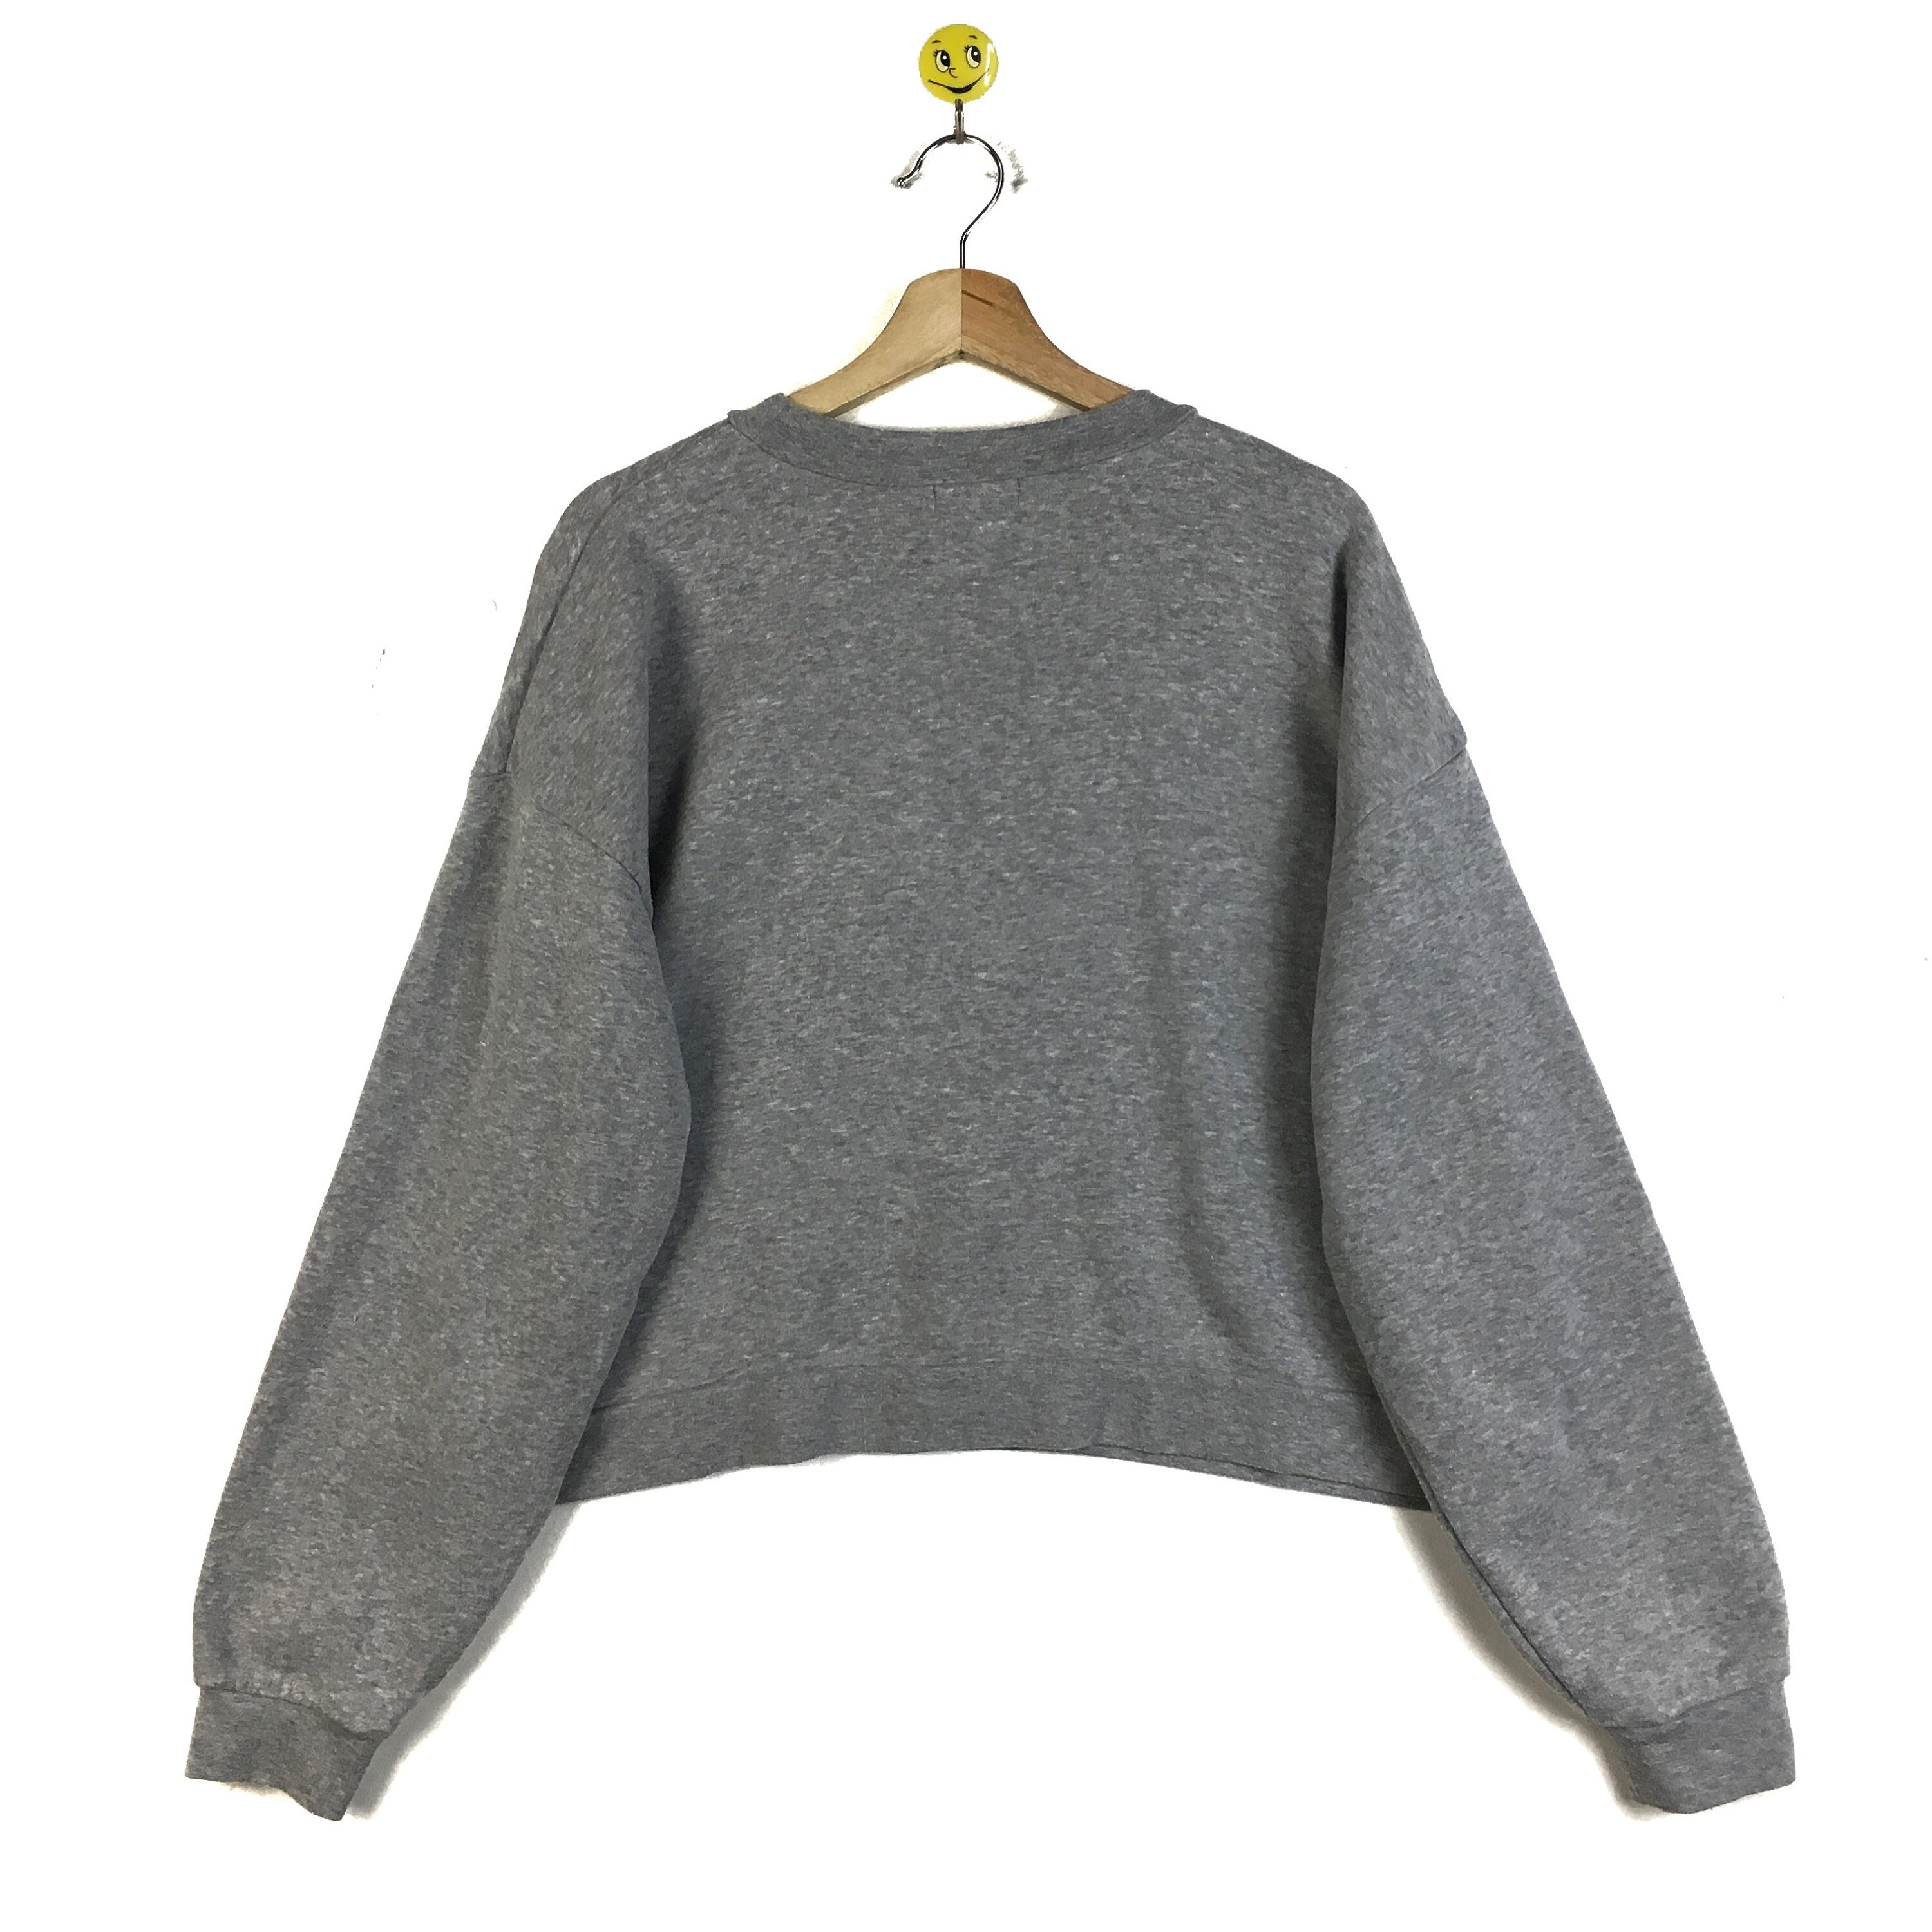 Rare Capital sweatshirt Capital pullover Capital sweater | Etsy